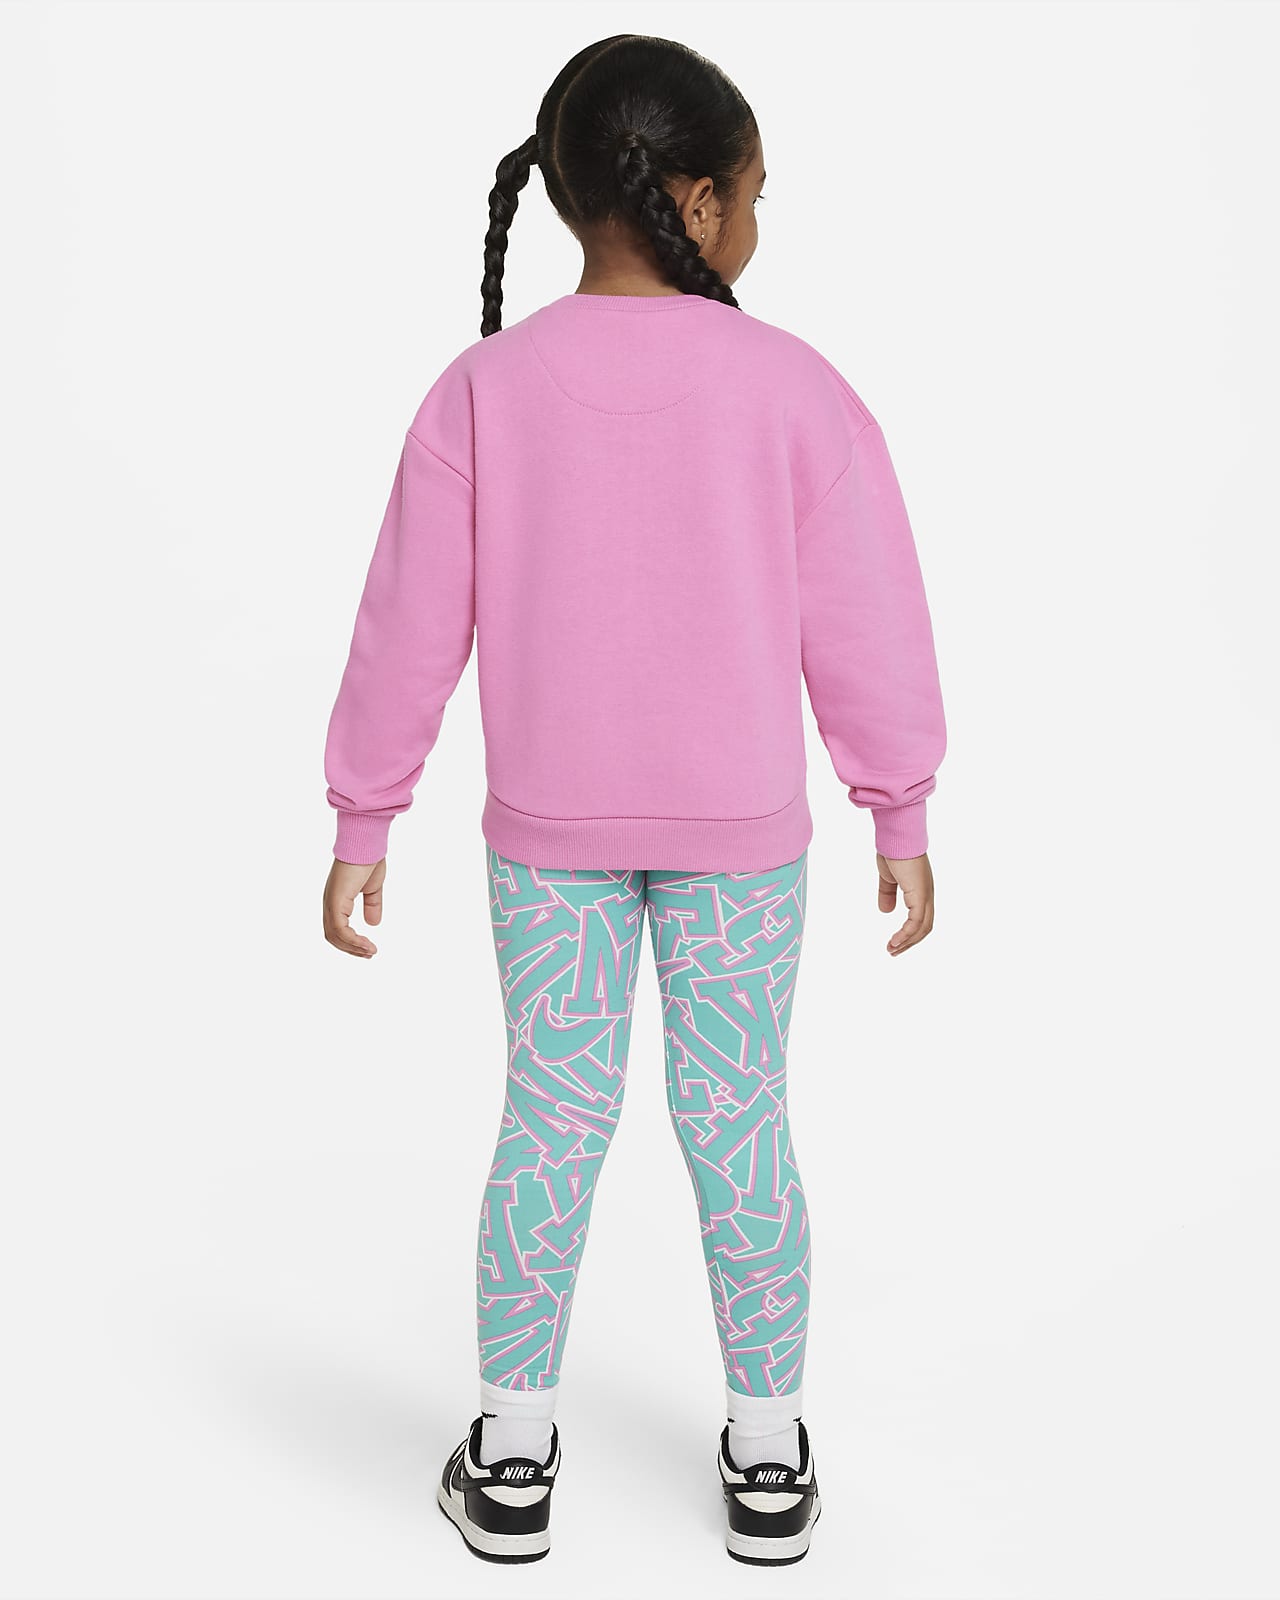 Children's leggings Nike Drit-Fit Warm - Baselayers - Textile - Handball  wear